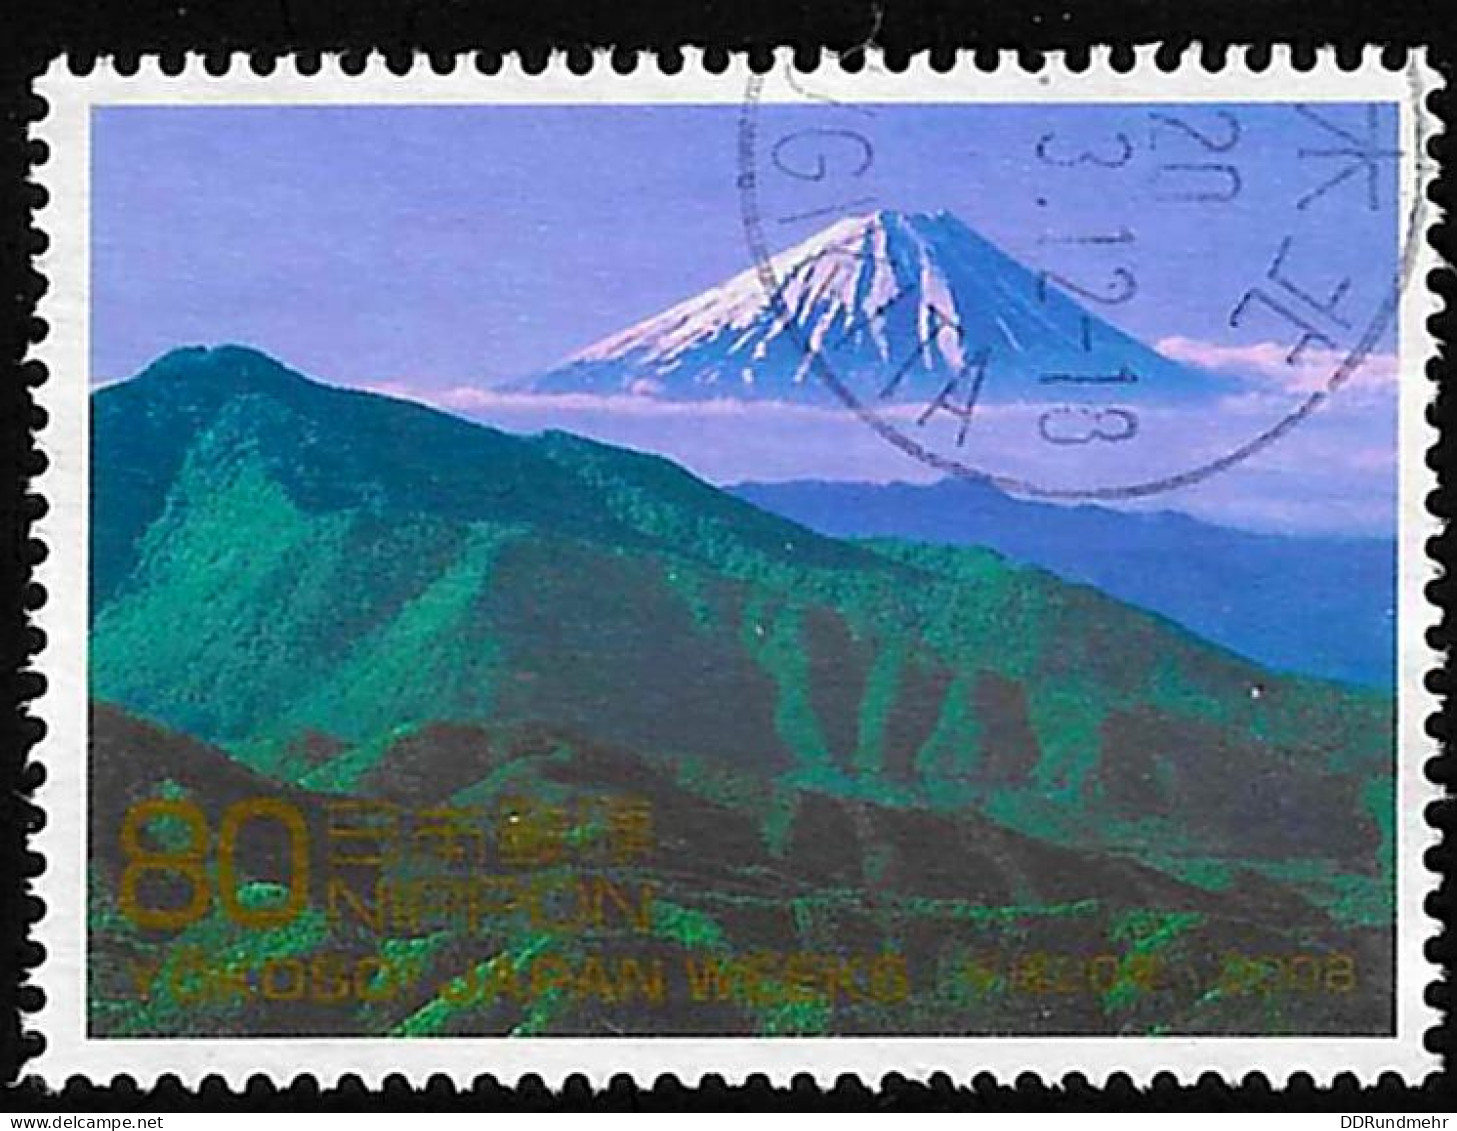 2008 Fuji   Michel JP 4447 Stamp Number JP 3014c Yvert Et Tellier JP 4274 Stanley Gibbons JP 3684 Used - Used Stamps